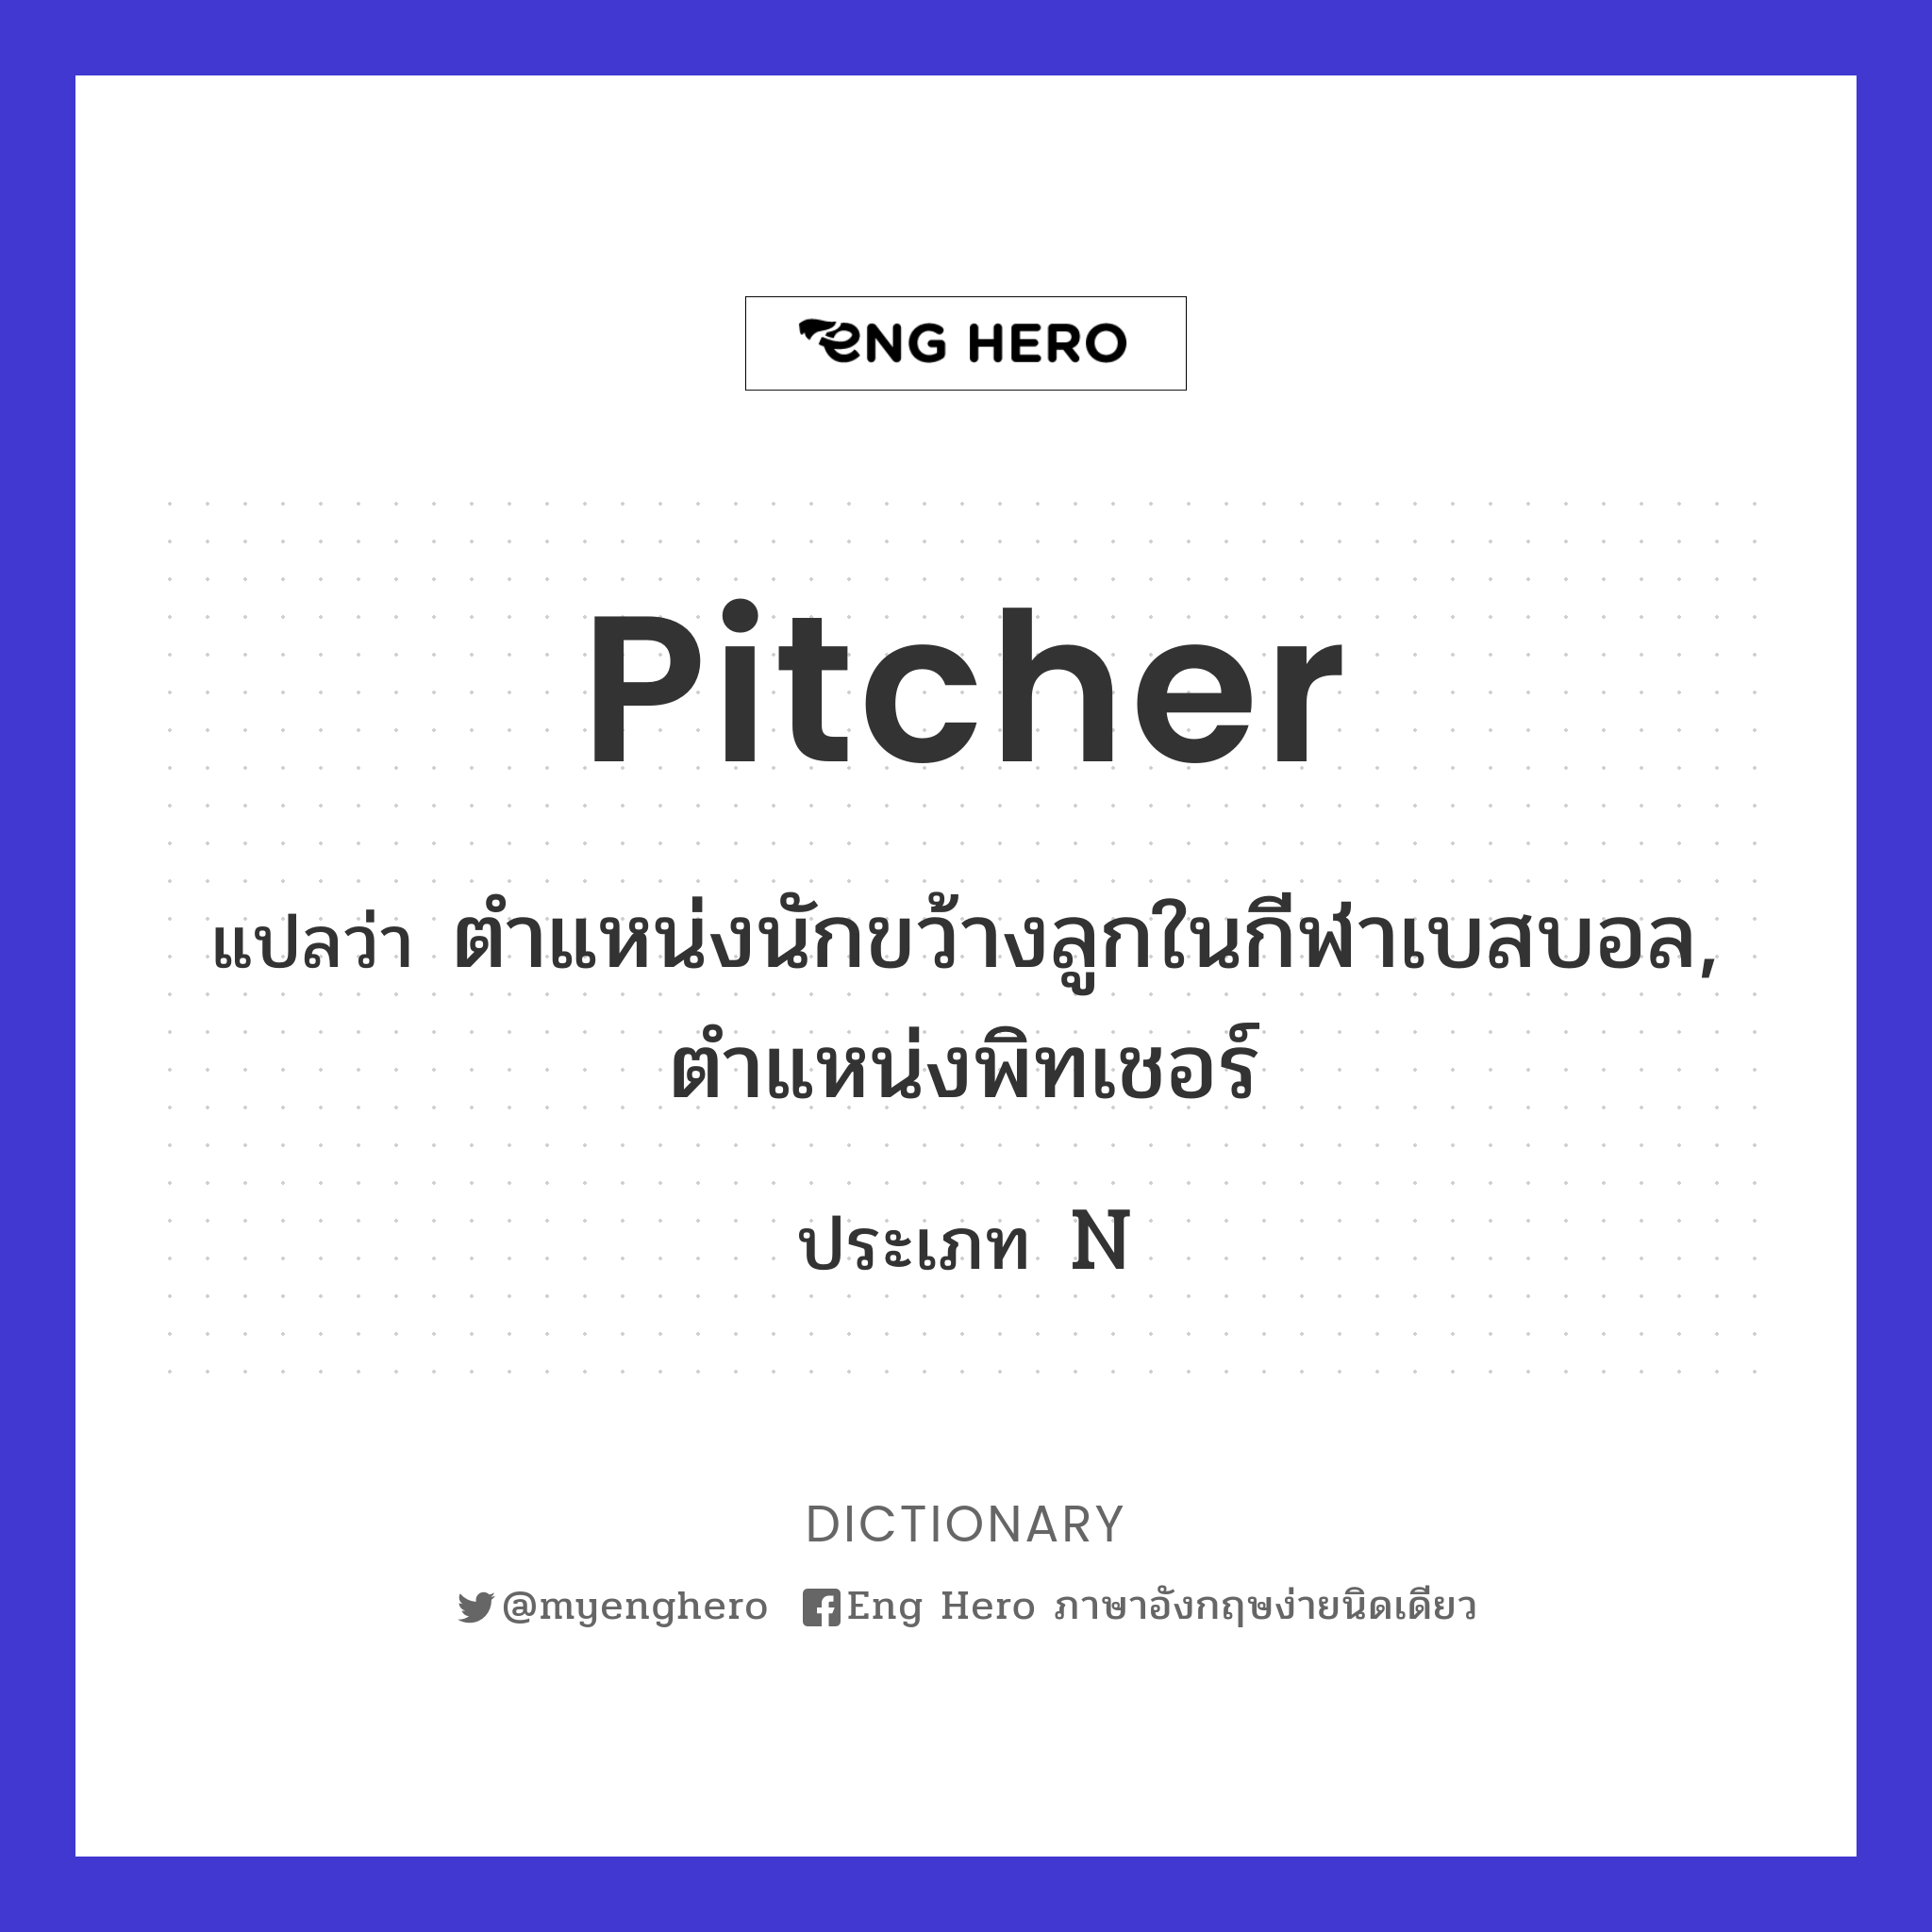 pitcher